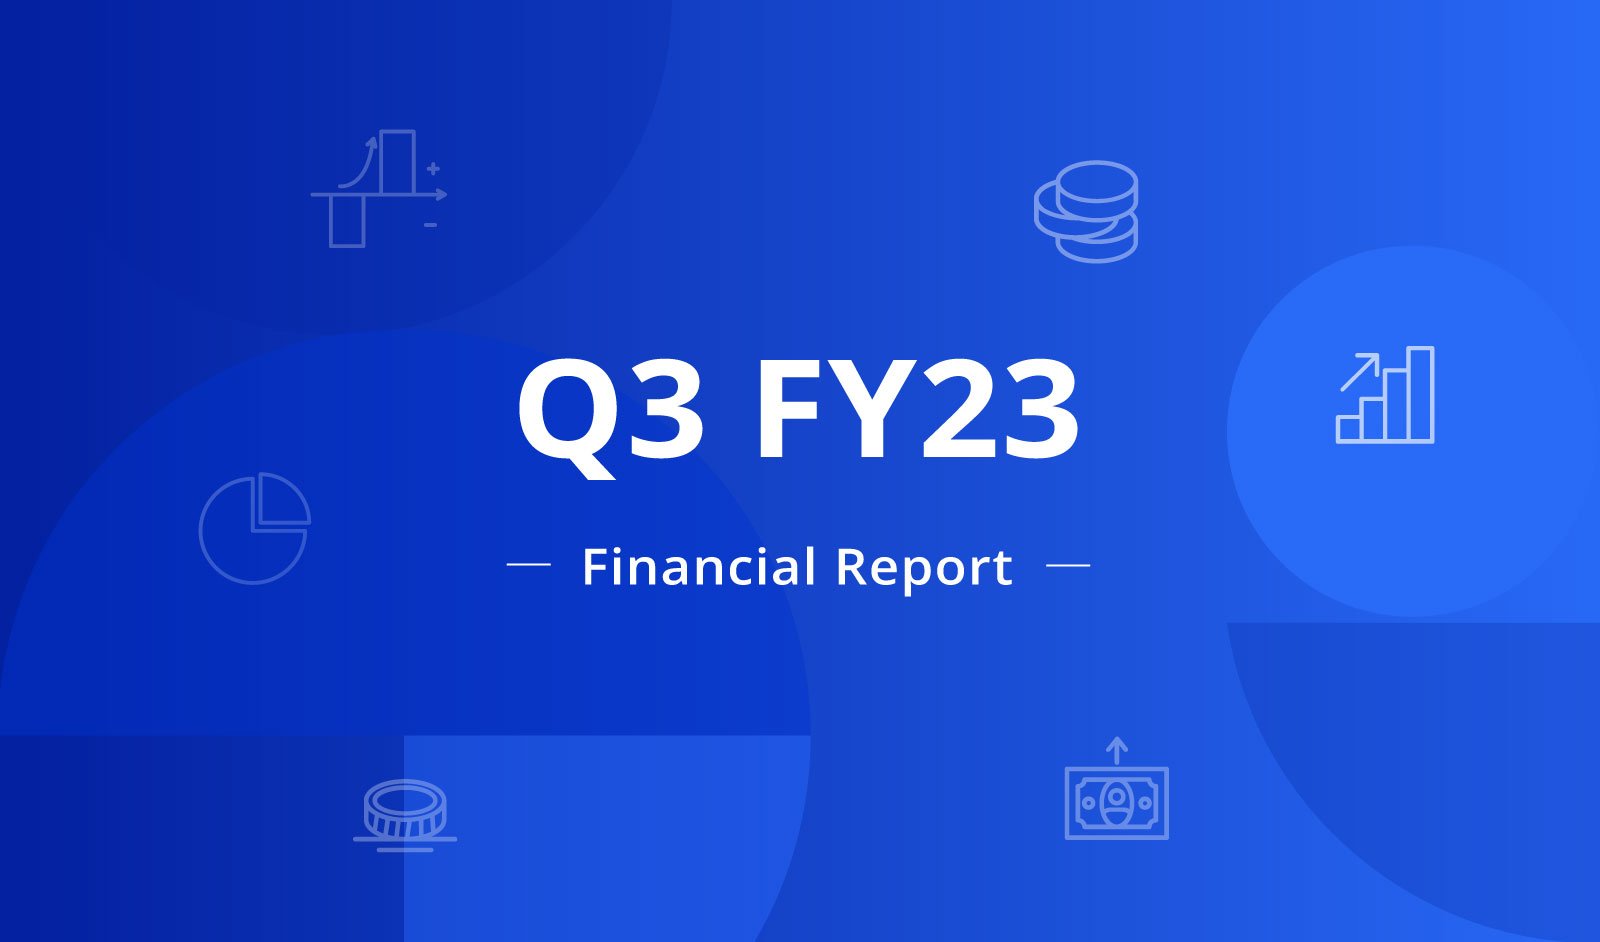 PR_Q3FY23 Financial report_Banner_p01_v01